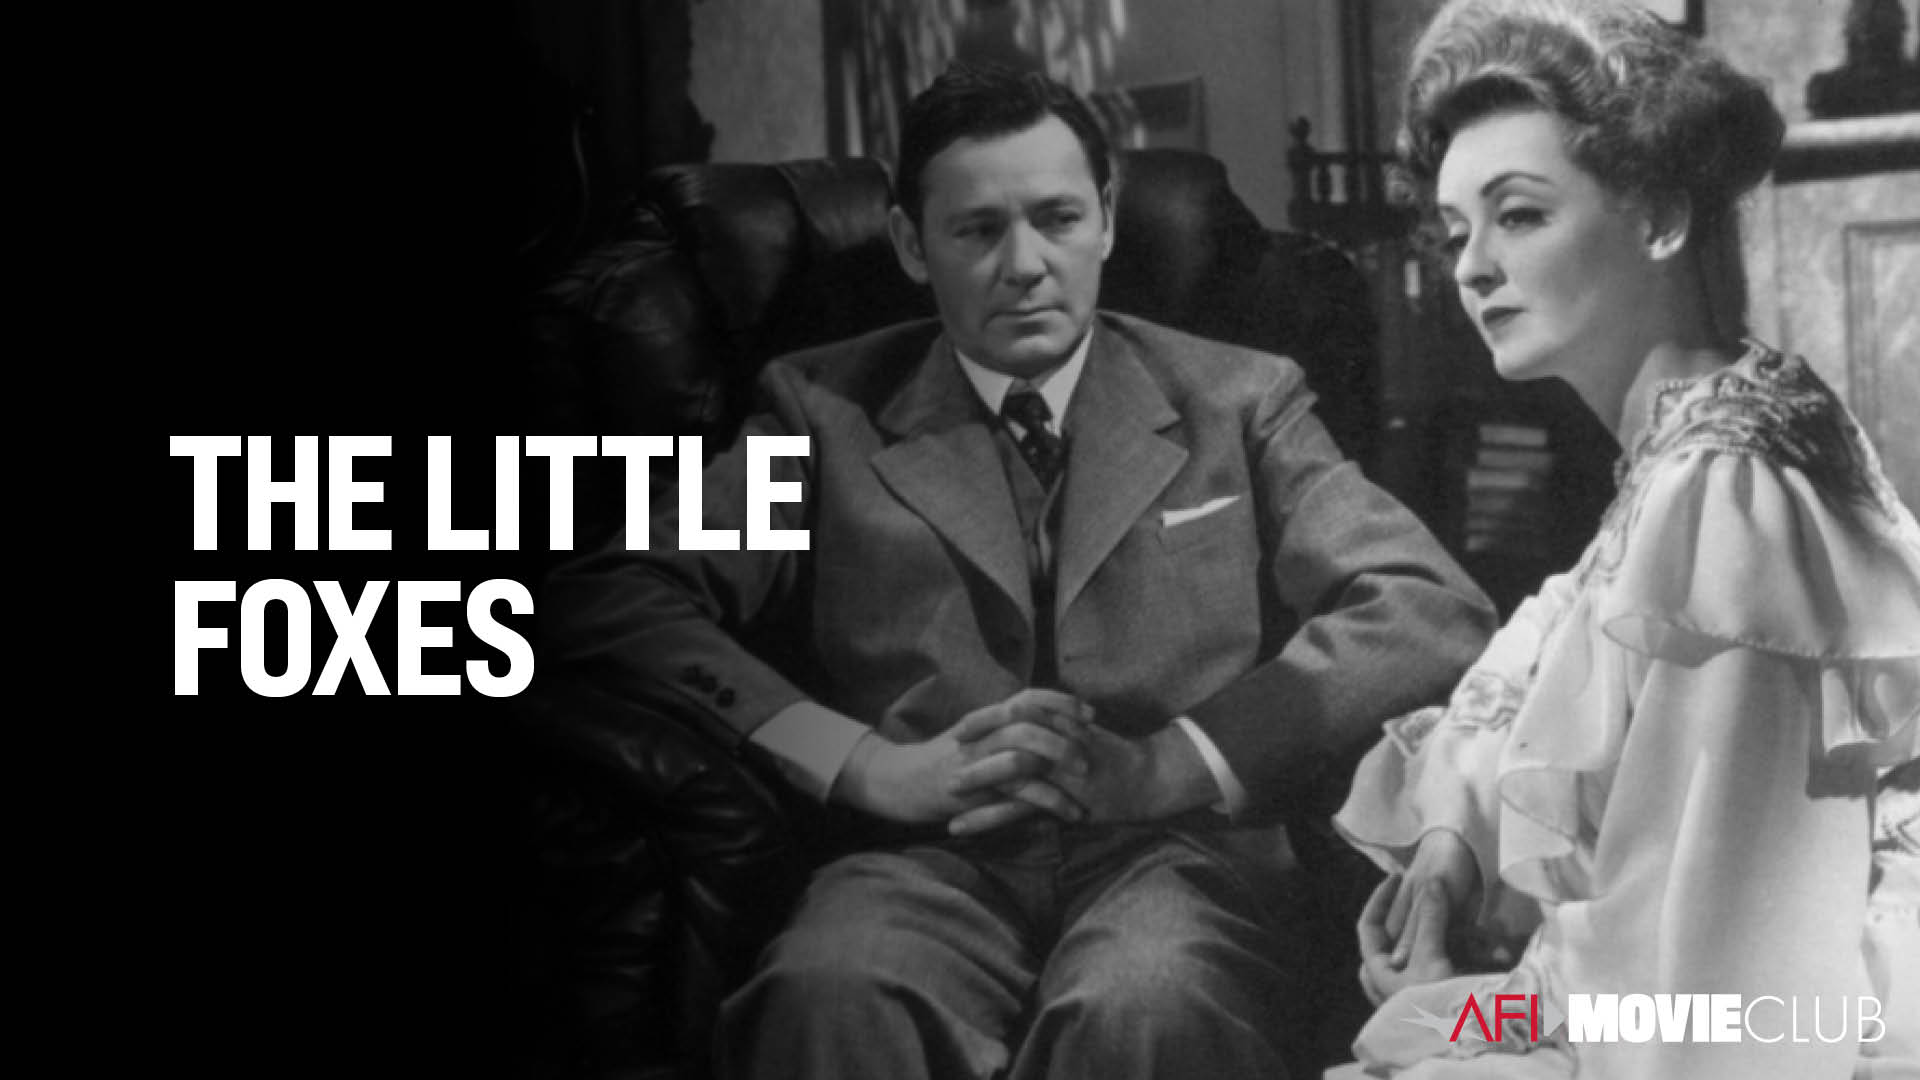 The Little Foxes Film Still - Bette Davis and Herbert Marshall